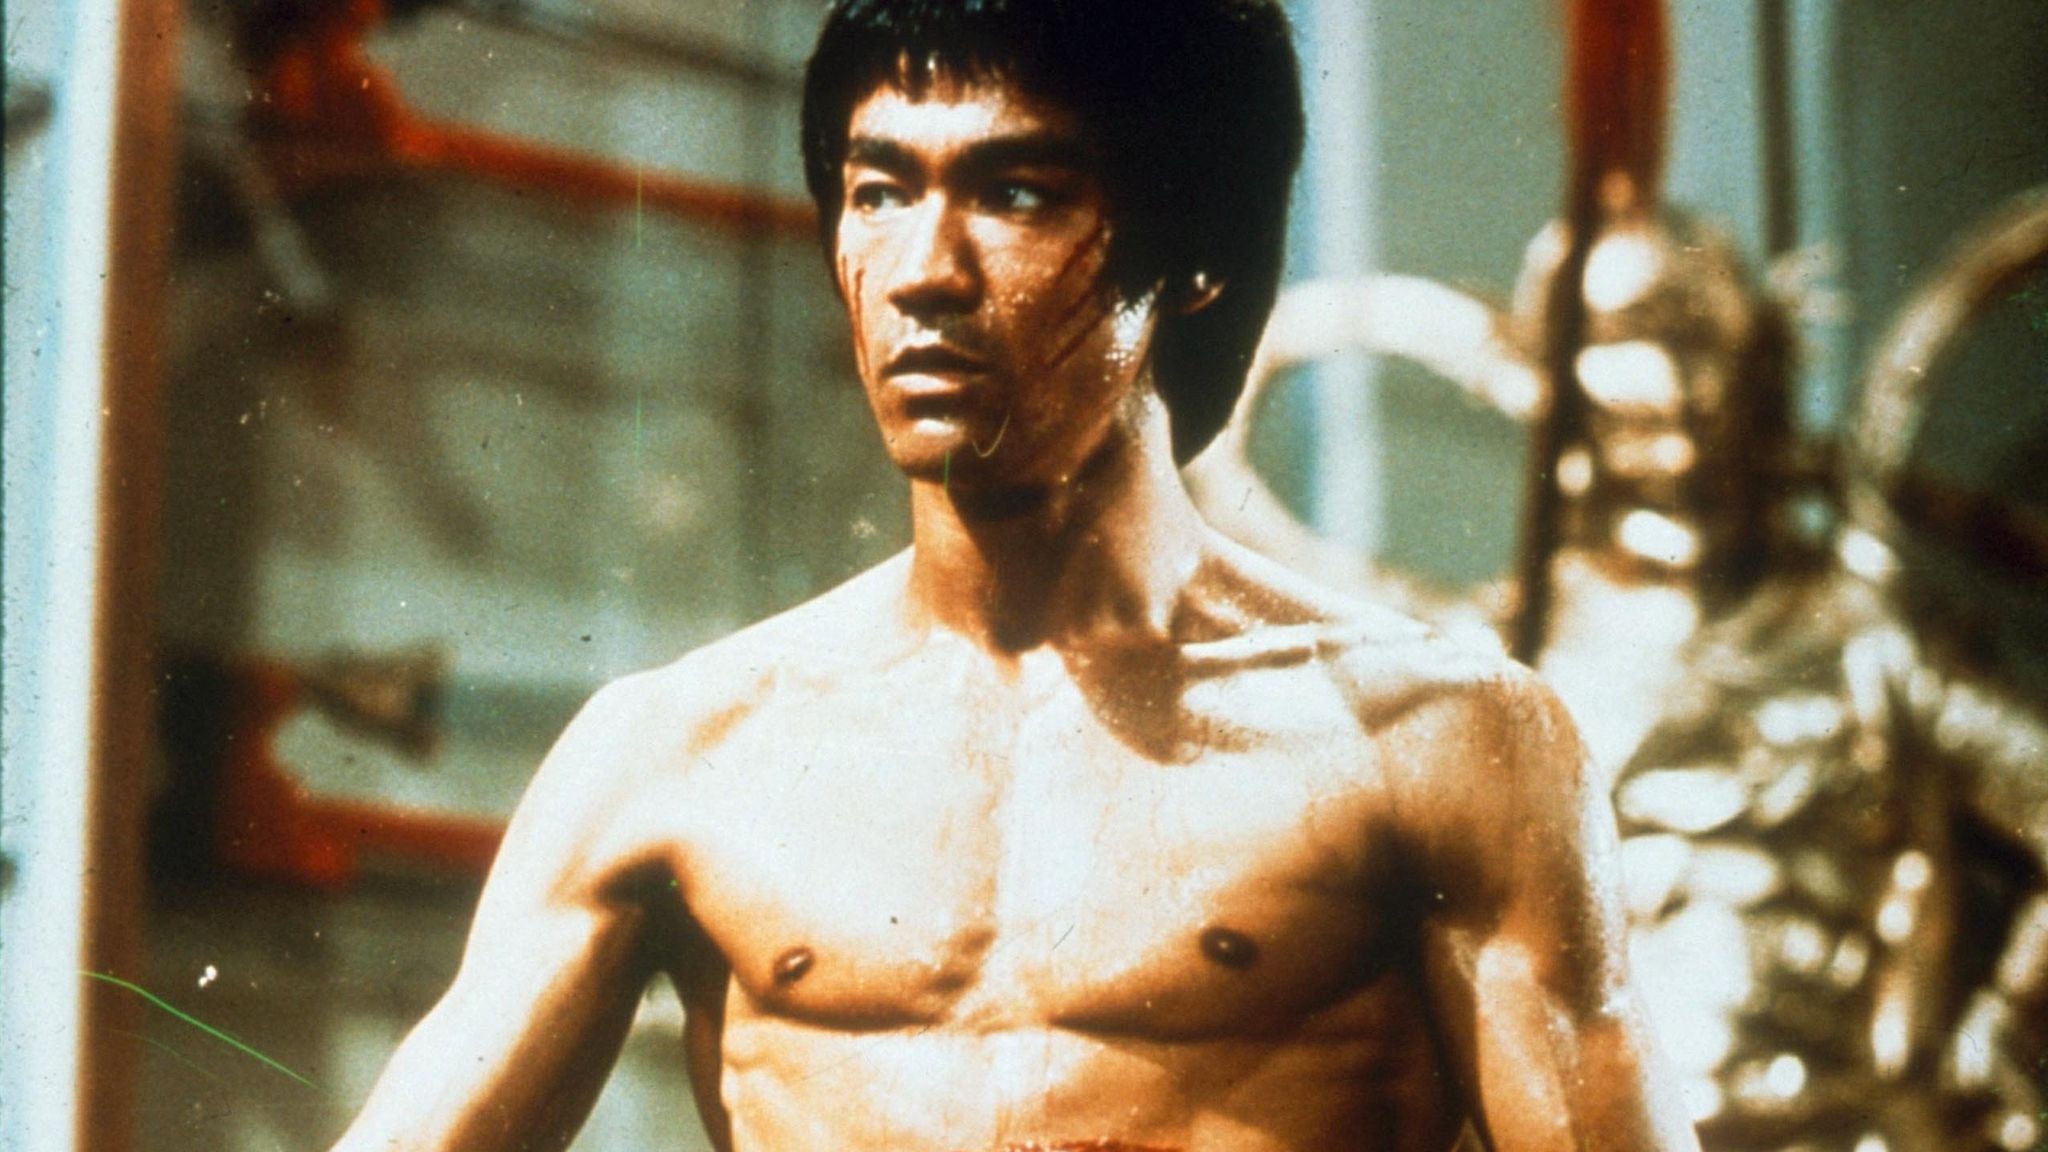 Bruce Lee body fat percentage ripl fitness